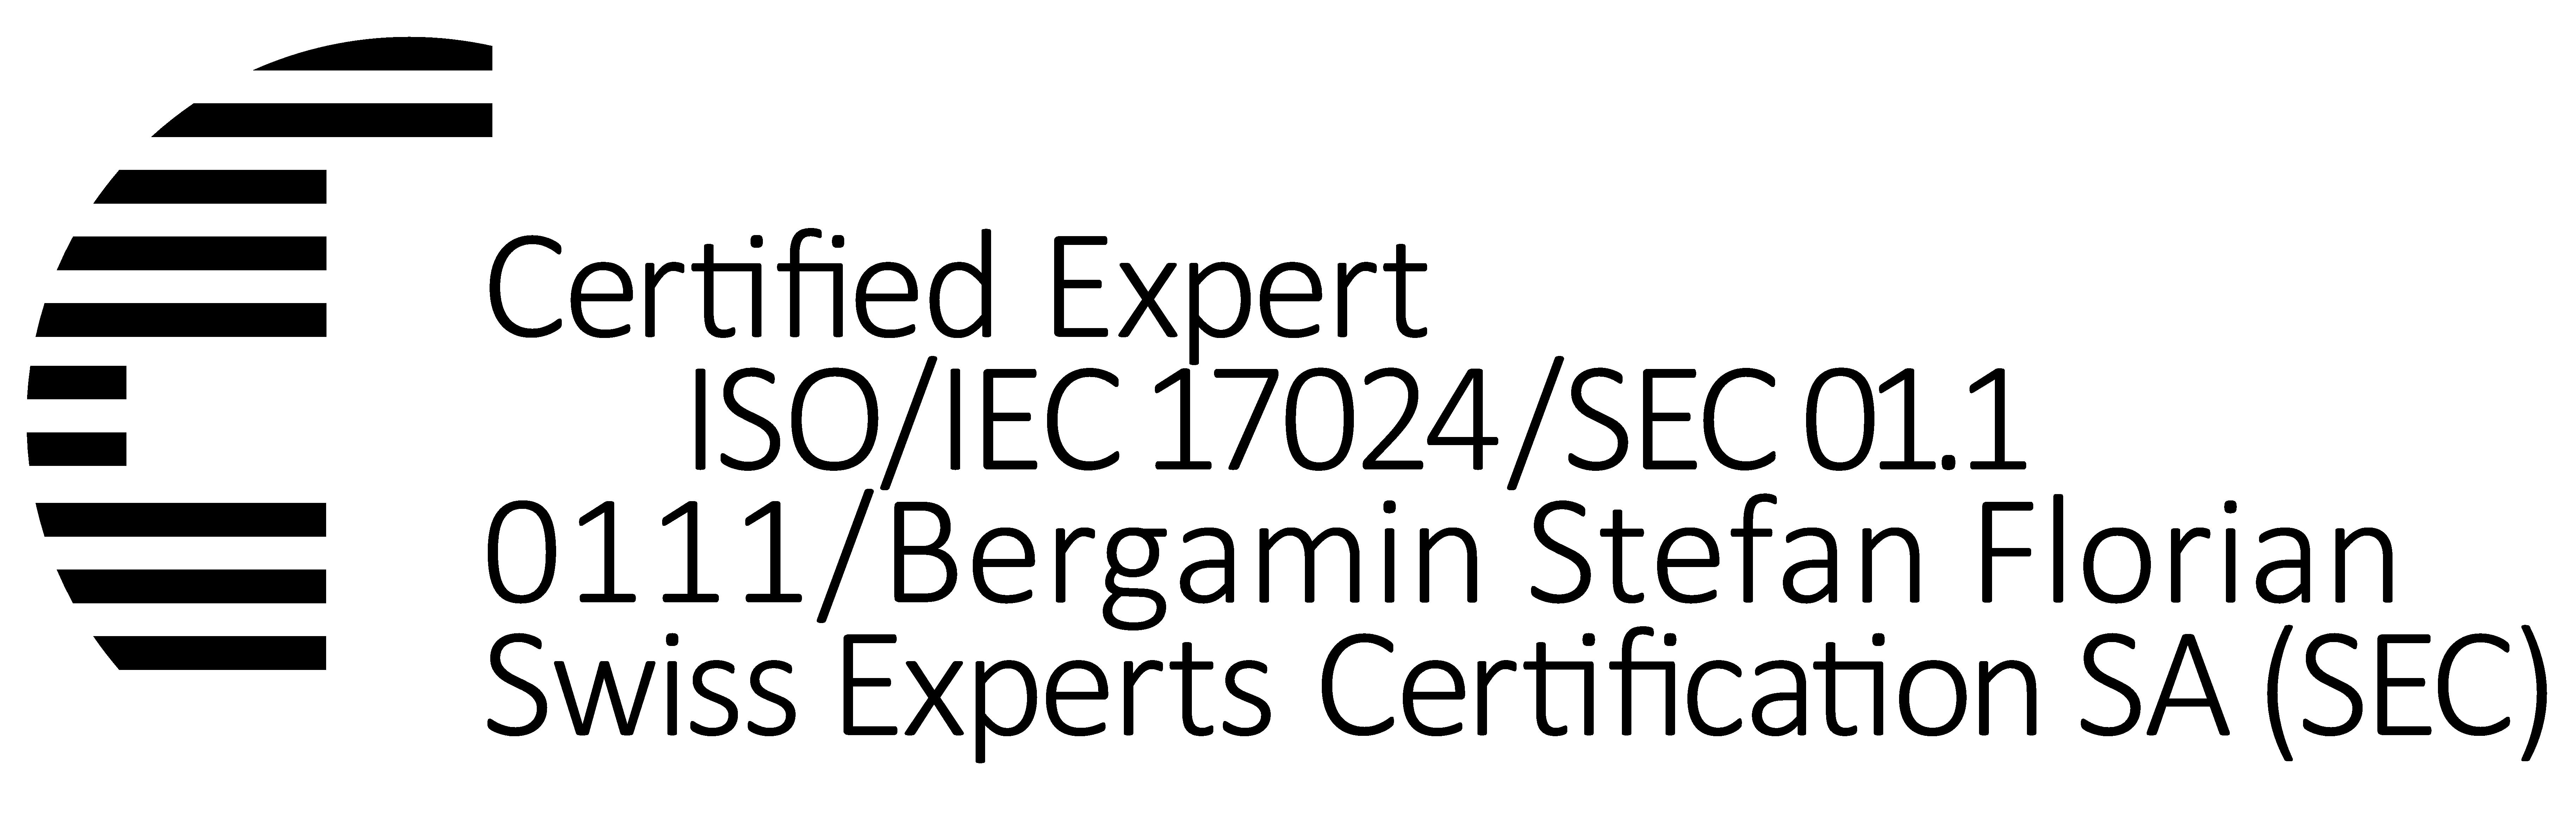 Swiss Experts Certification CA Stefan Bergamin